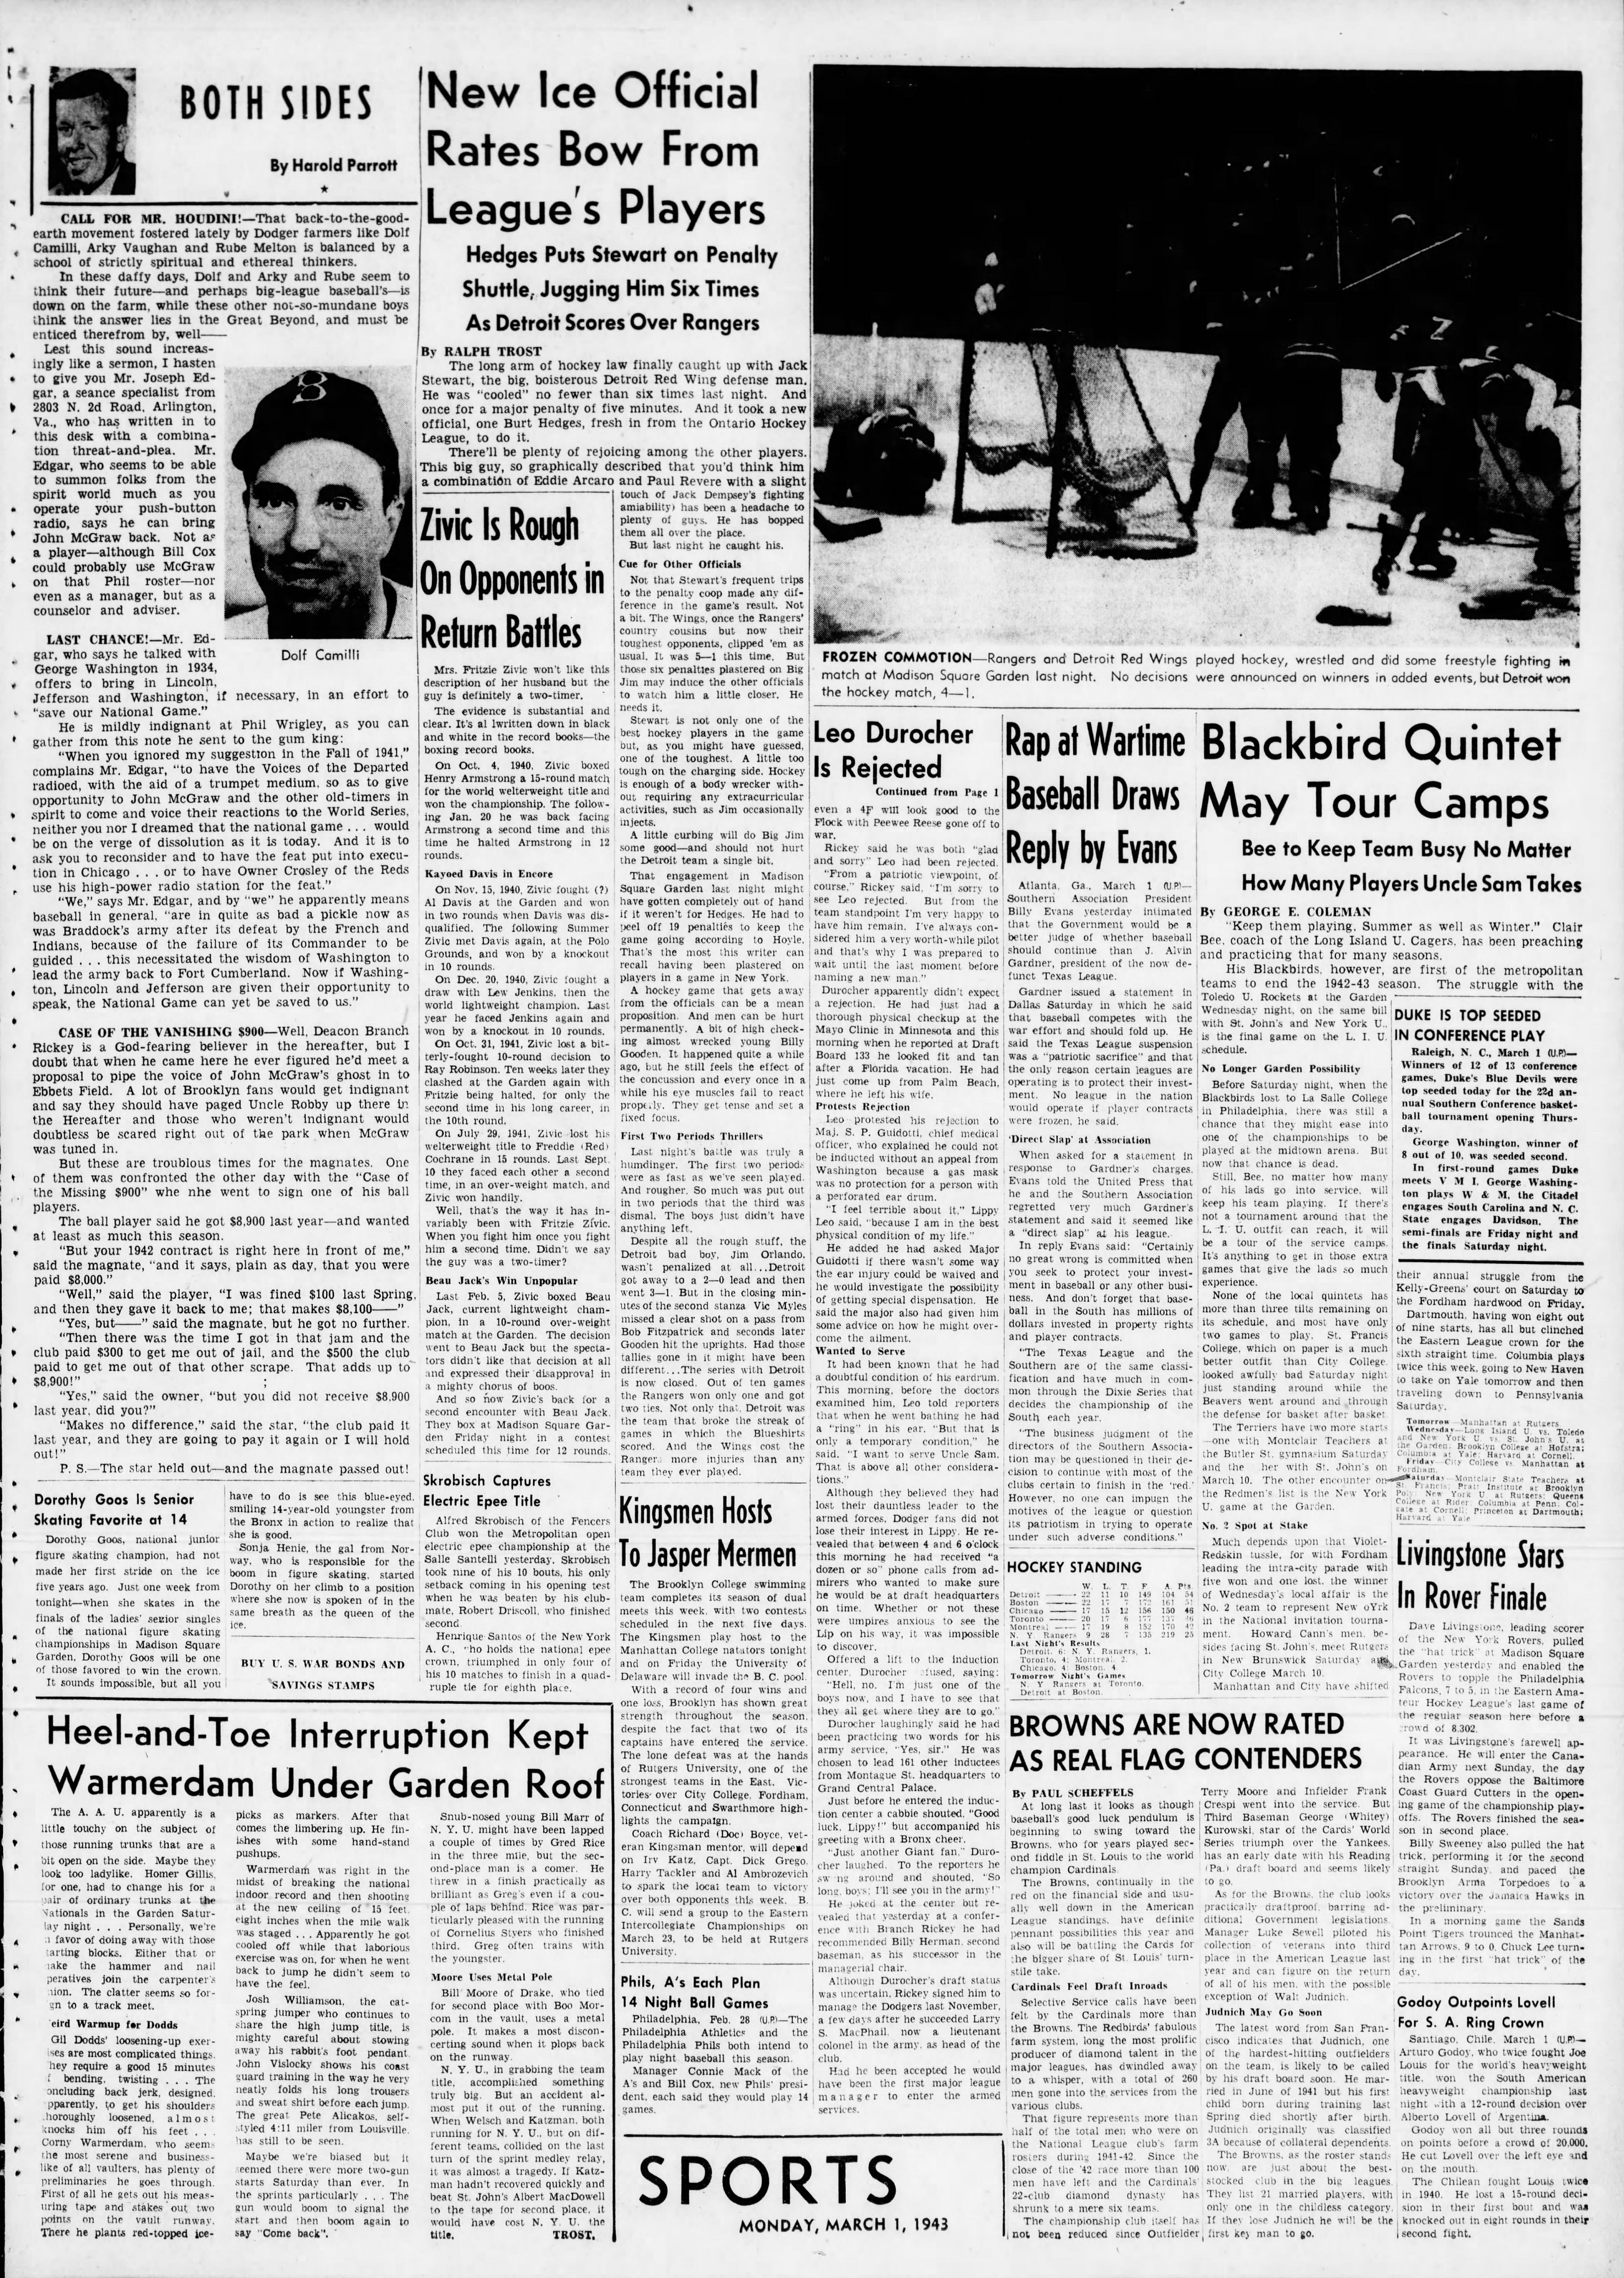 The_Brooklyn_Daily_Eagle_Mon__Mar_1__1943_(4).jpg